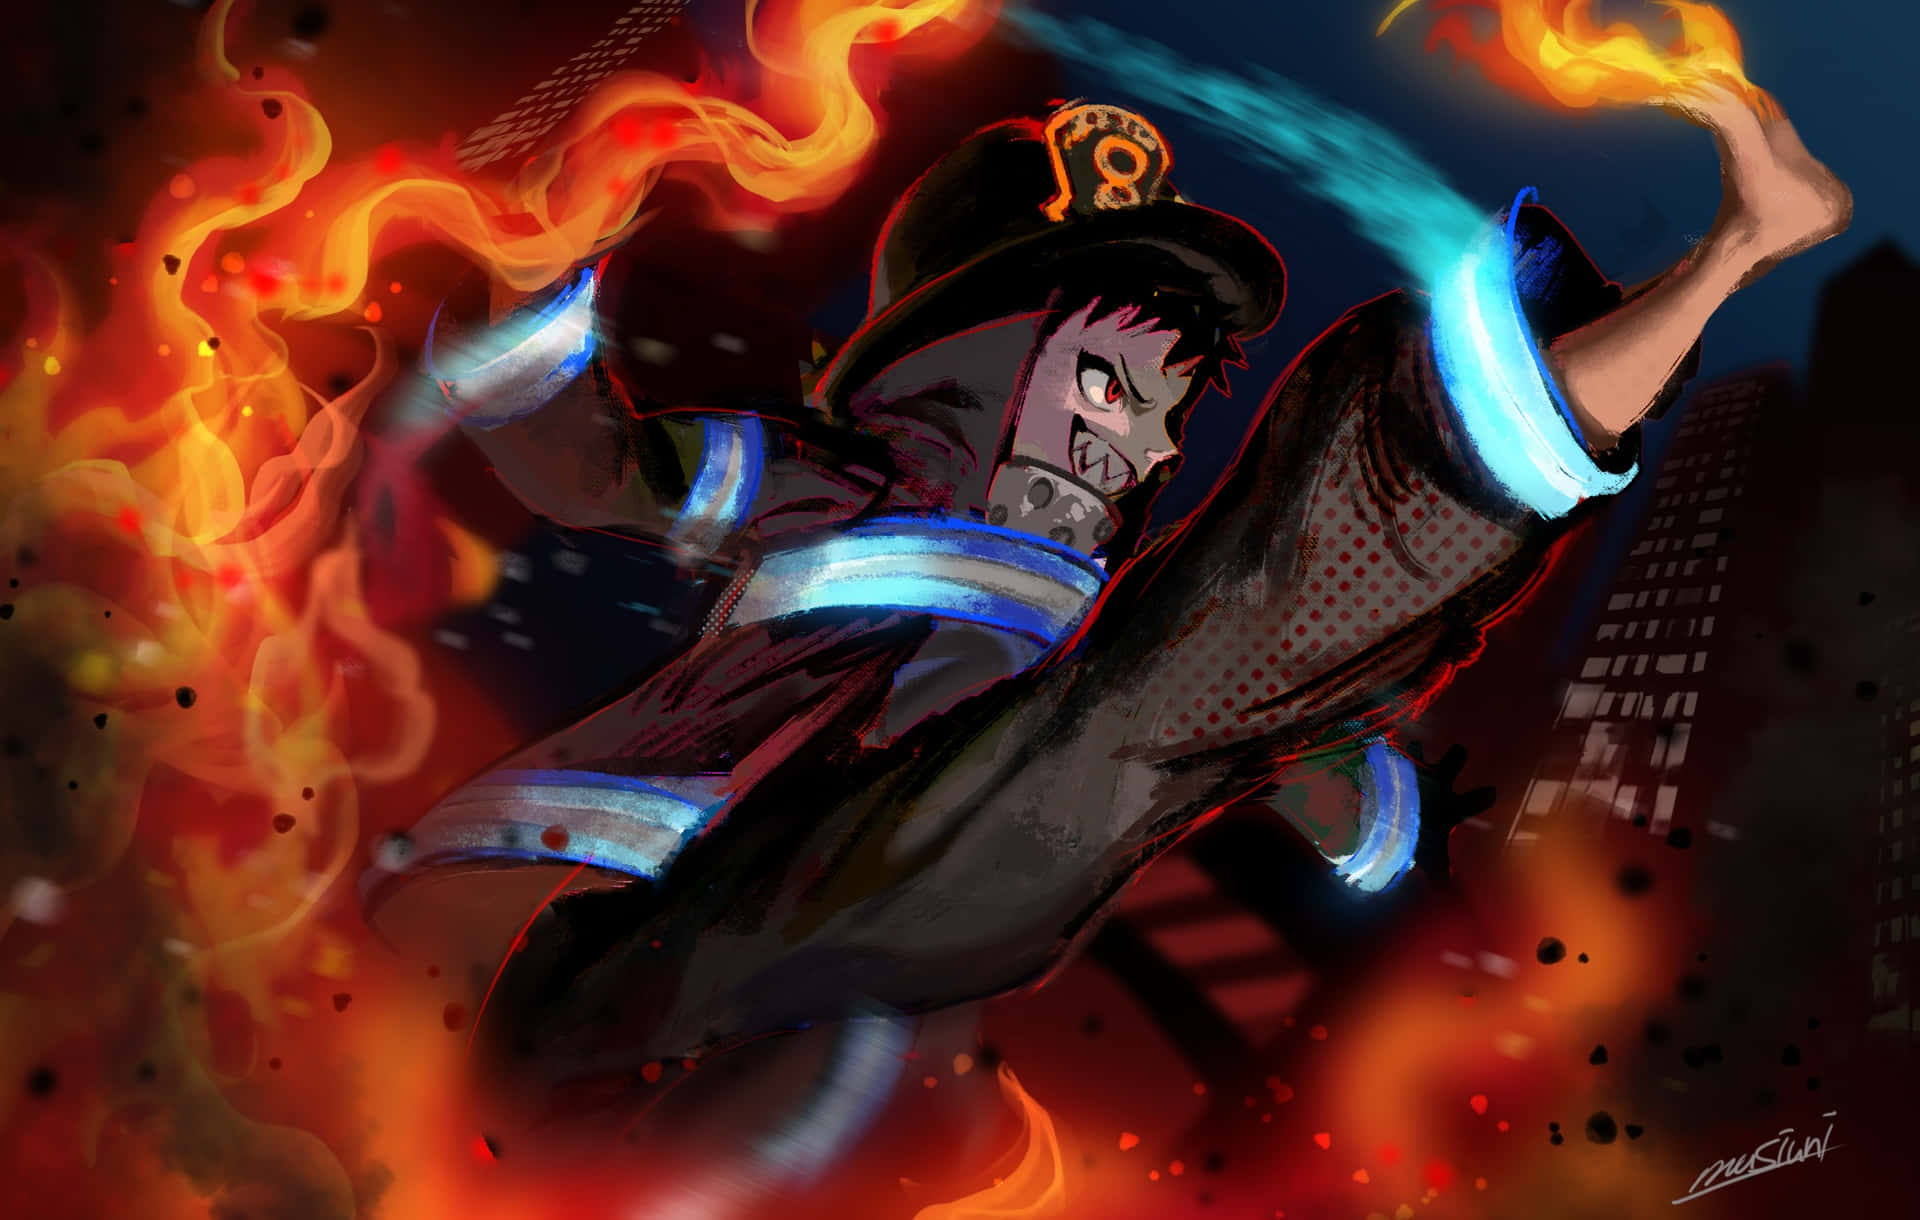 Feel the intensity of unbridled power in Anime Fire Wallpaper